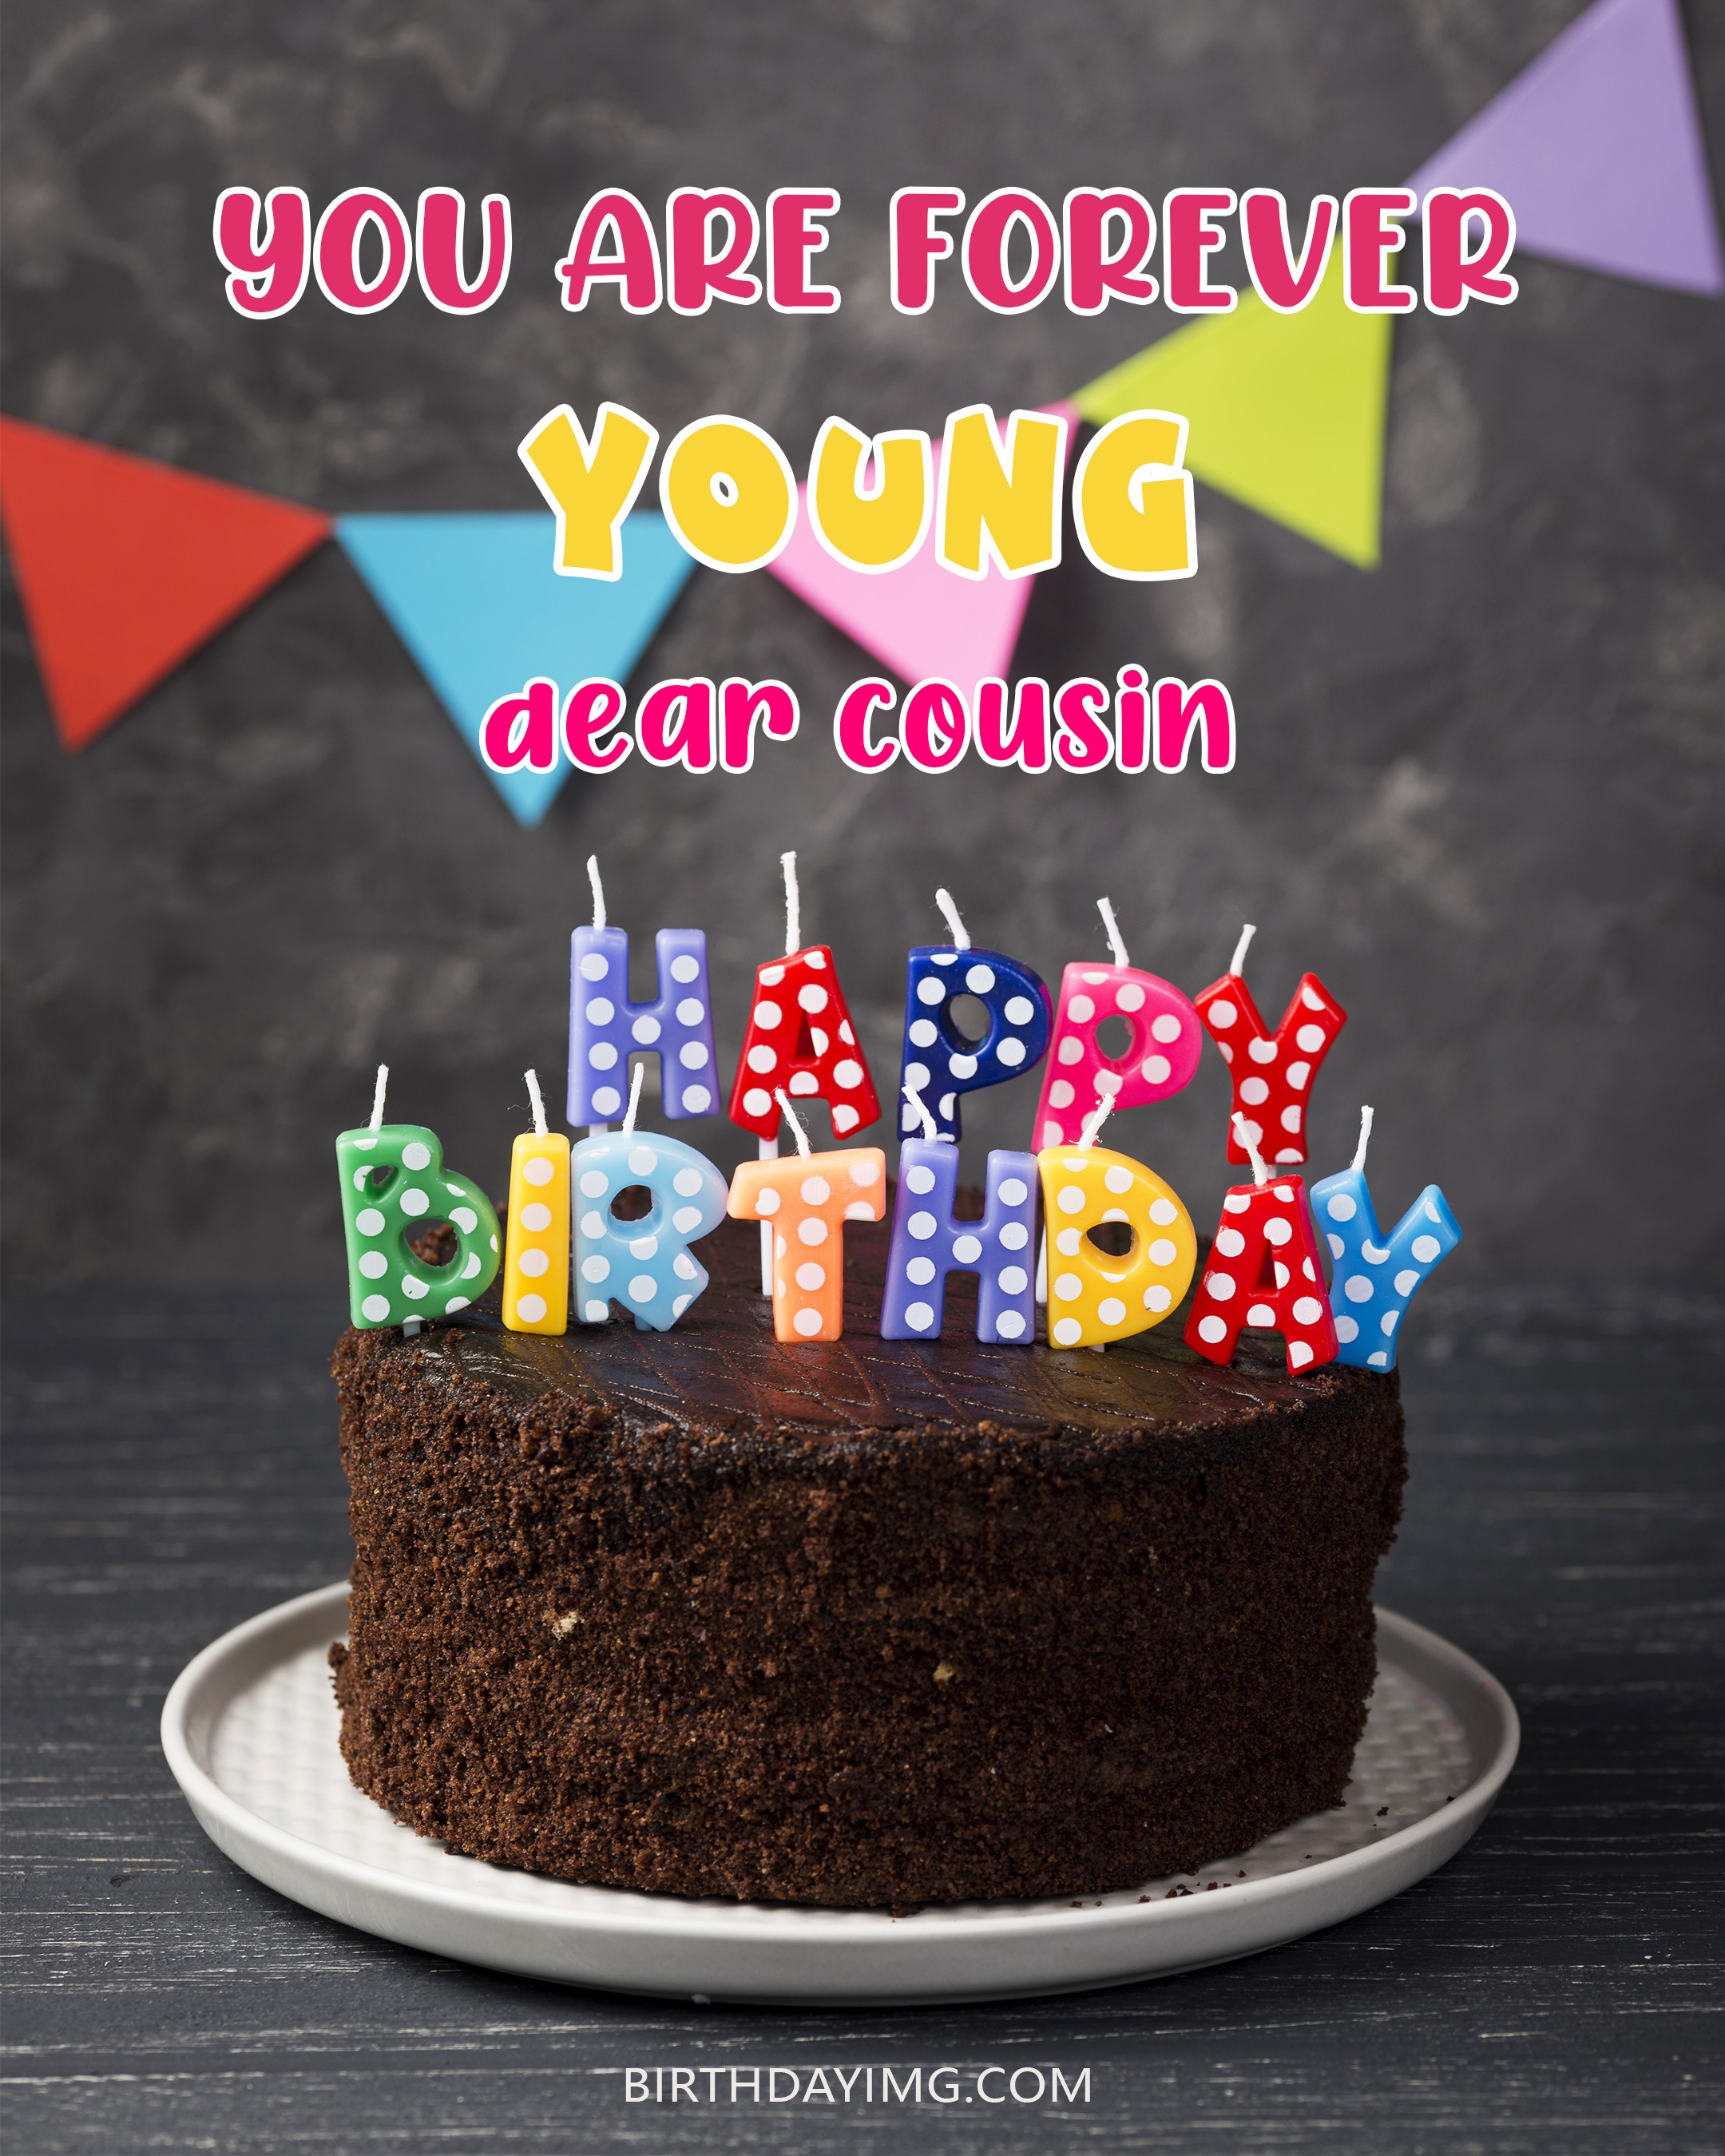 Free Happy Birthday Image For Cousin With Chocolate Cake - birthdayimg.com